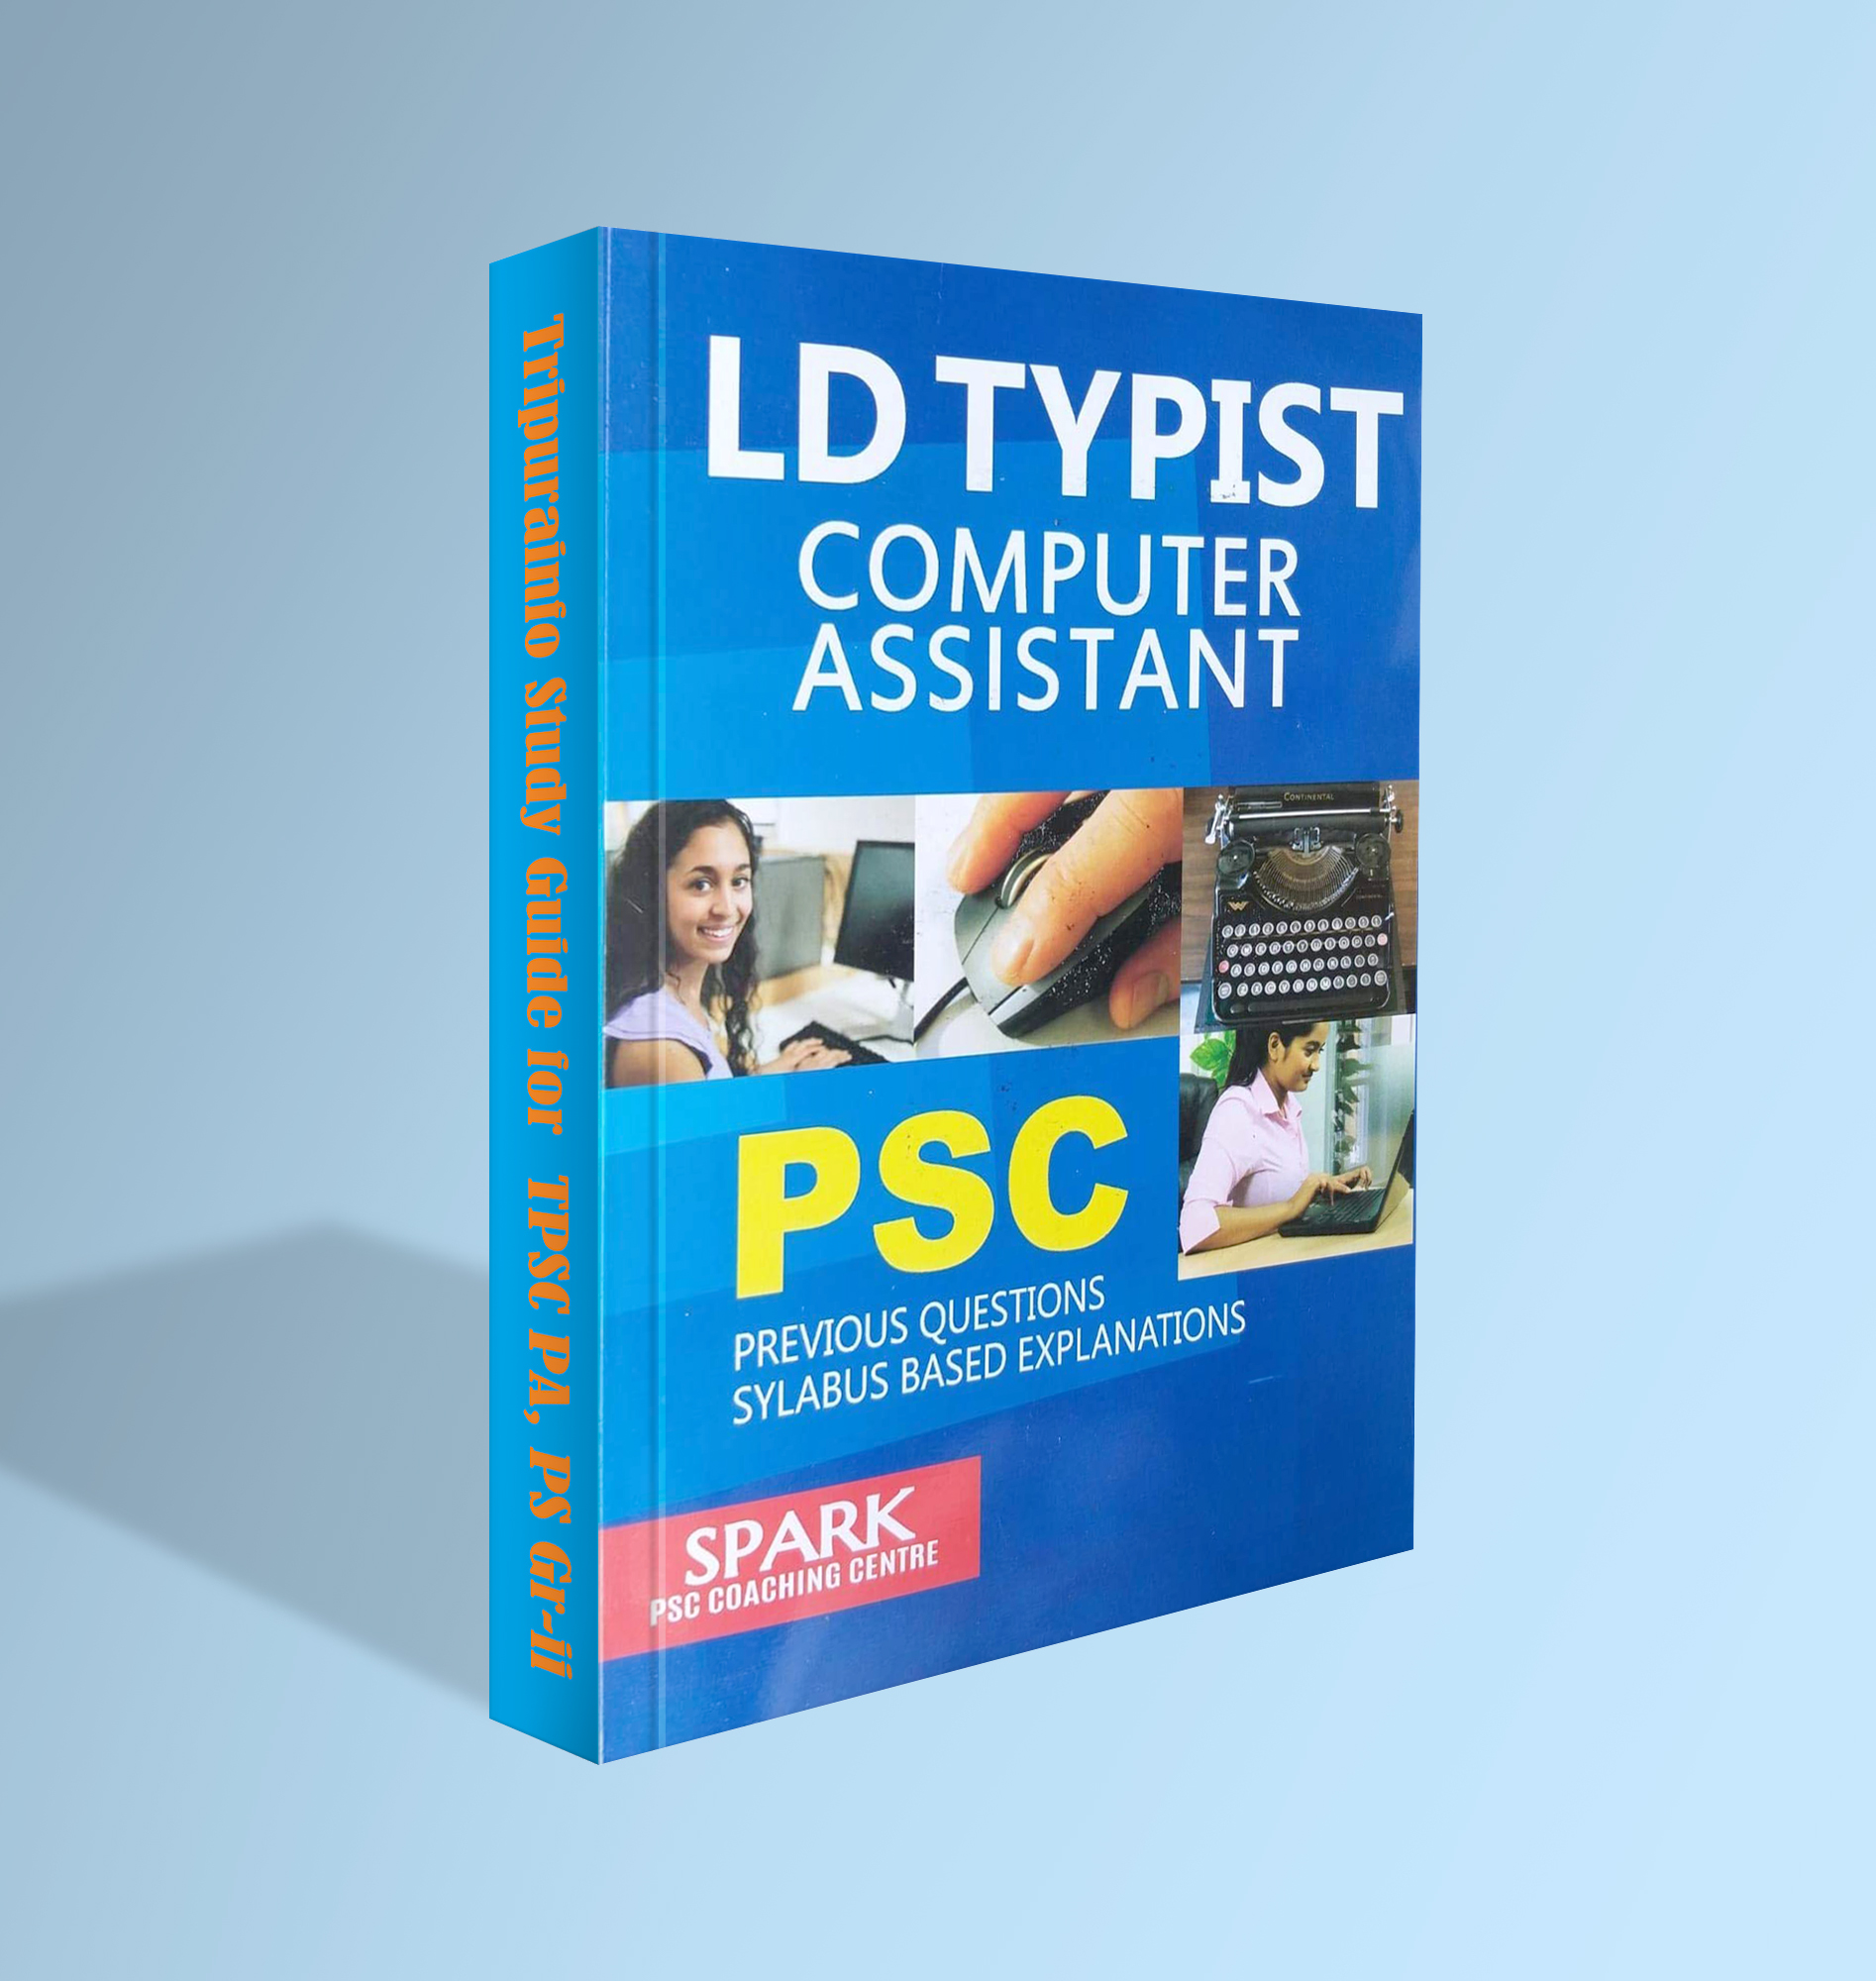 LD Typist Computer Assistant